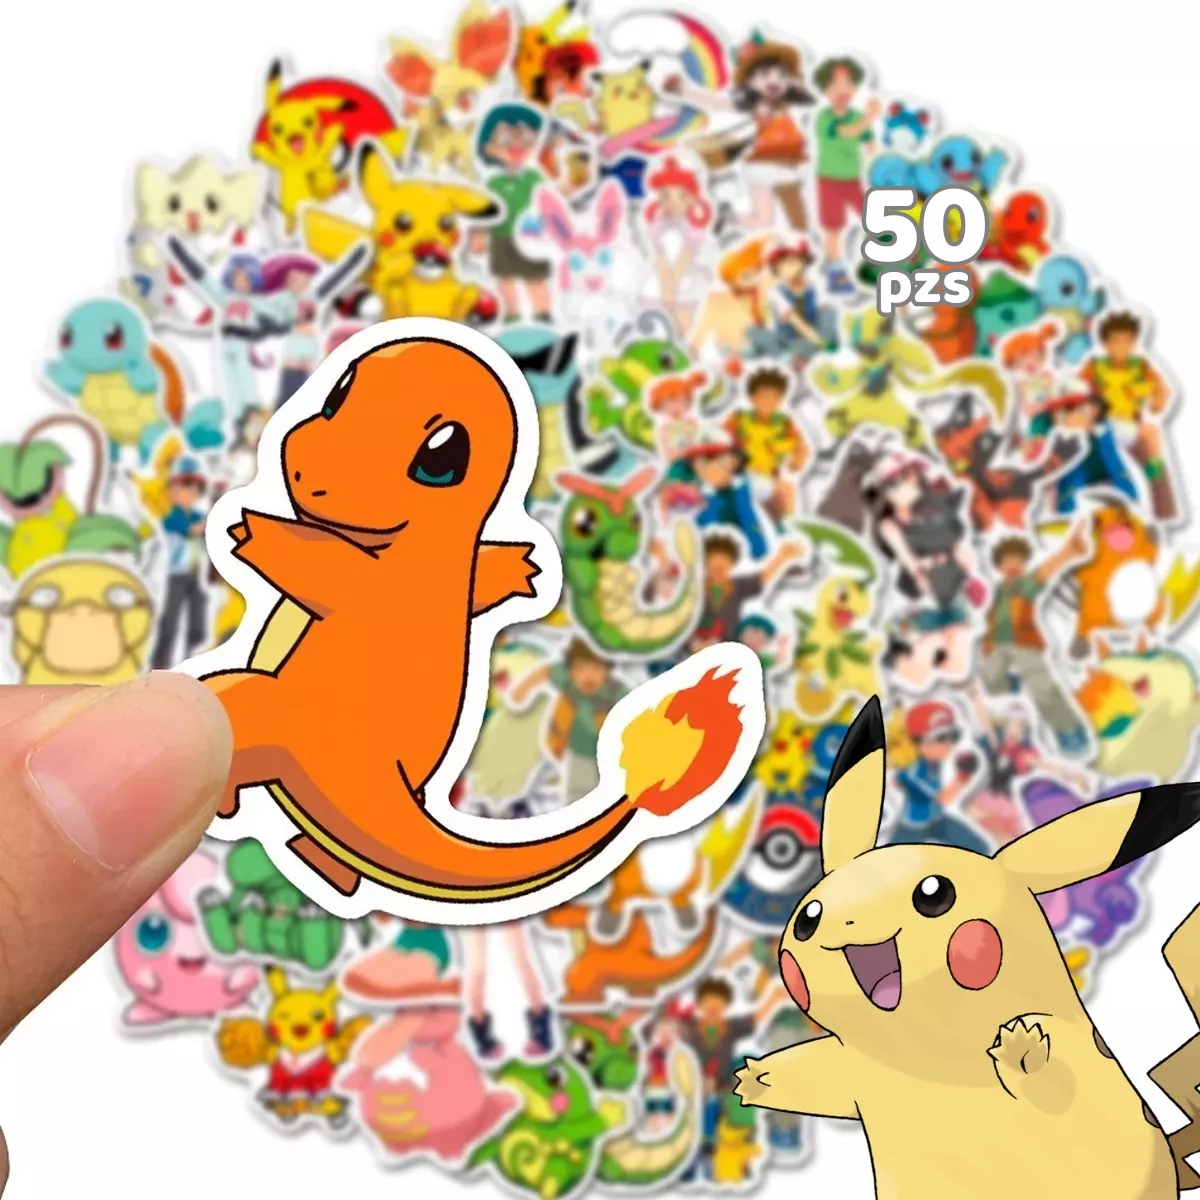 Segunda imagen para búsqueda de stickers anime